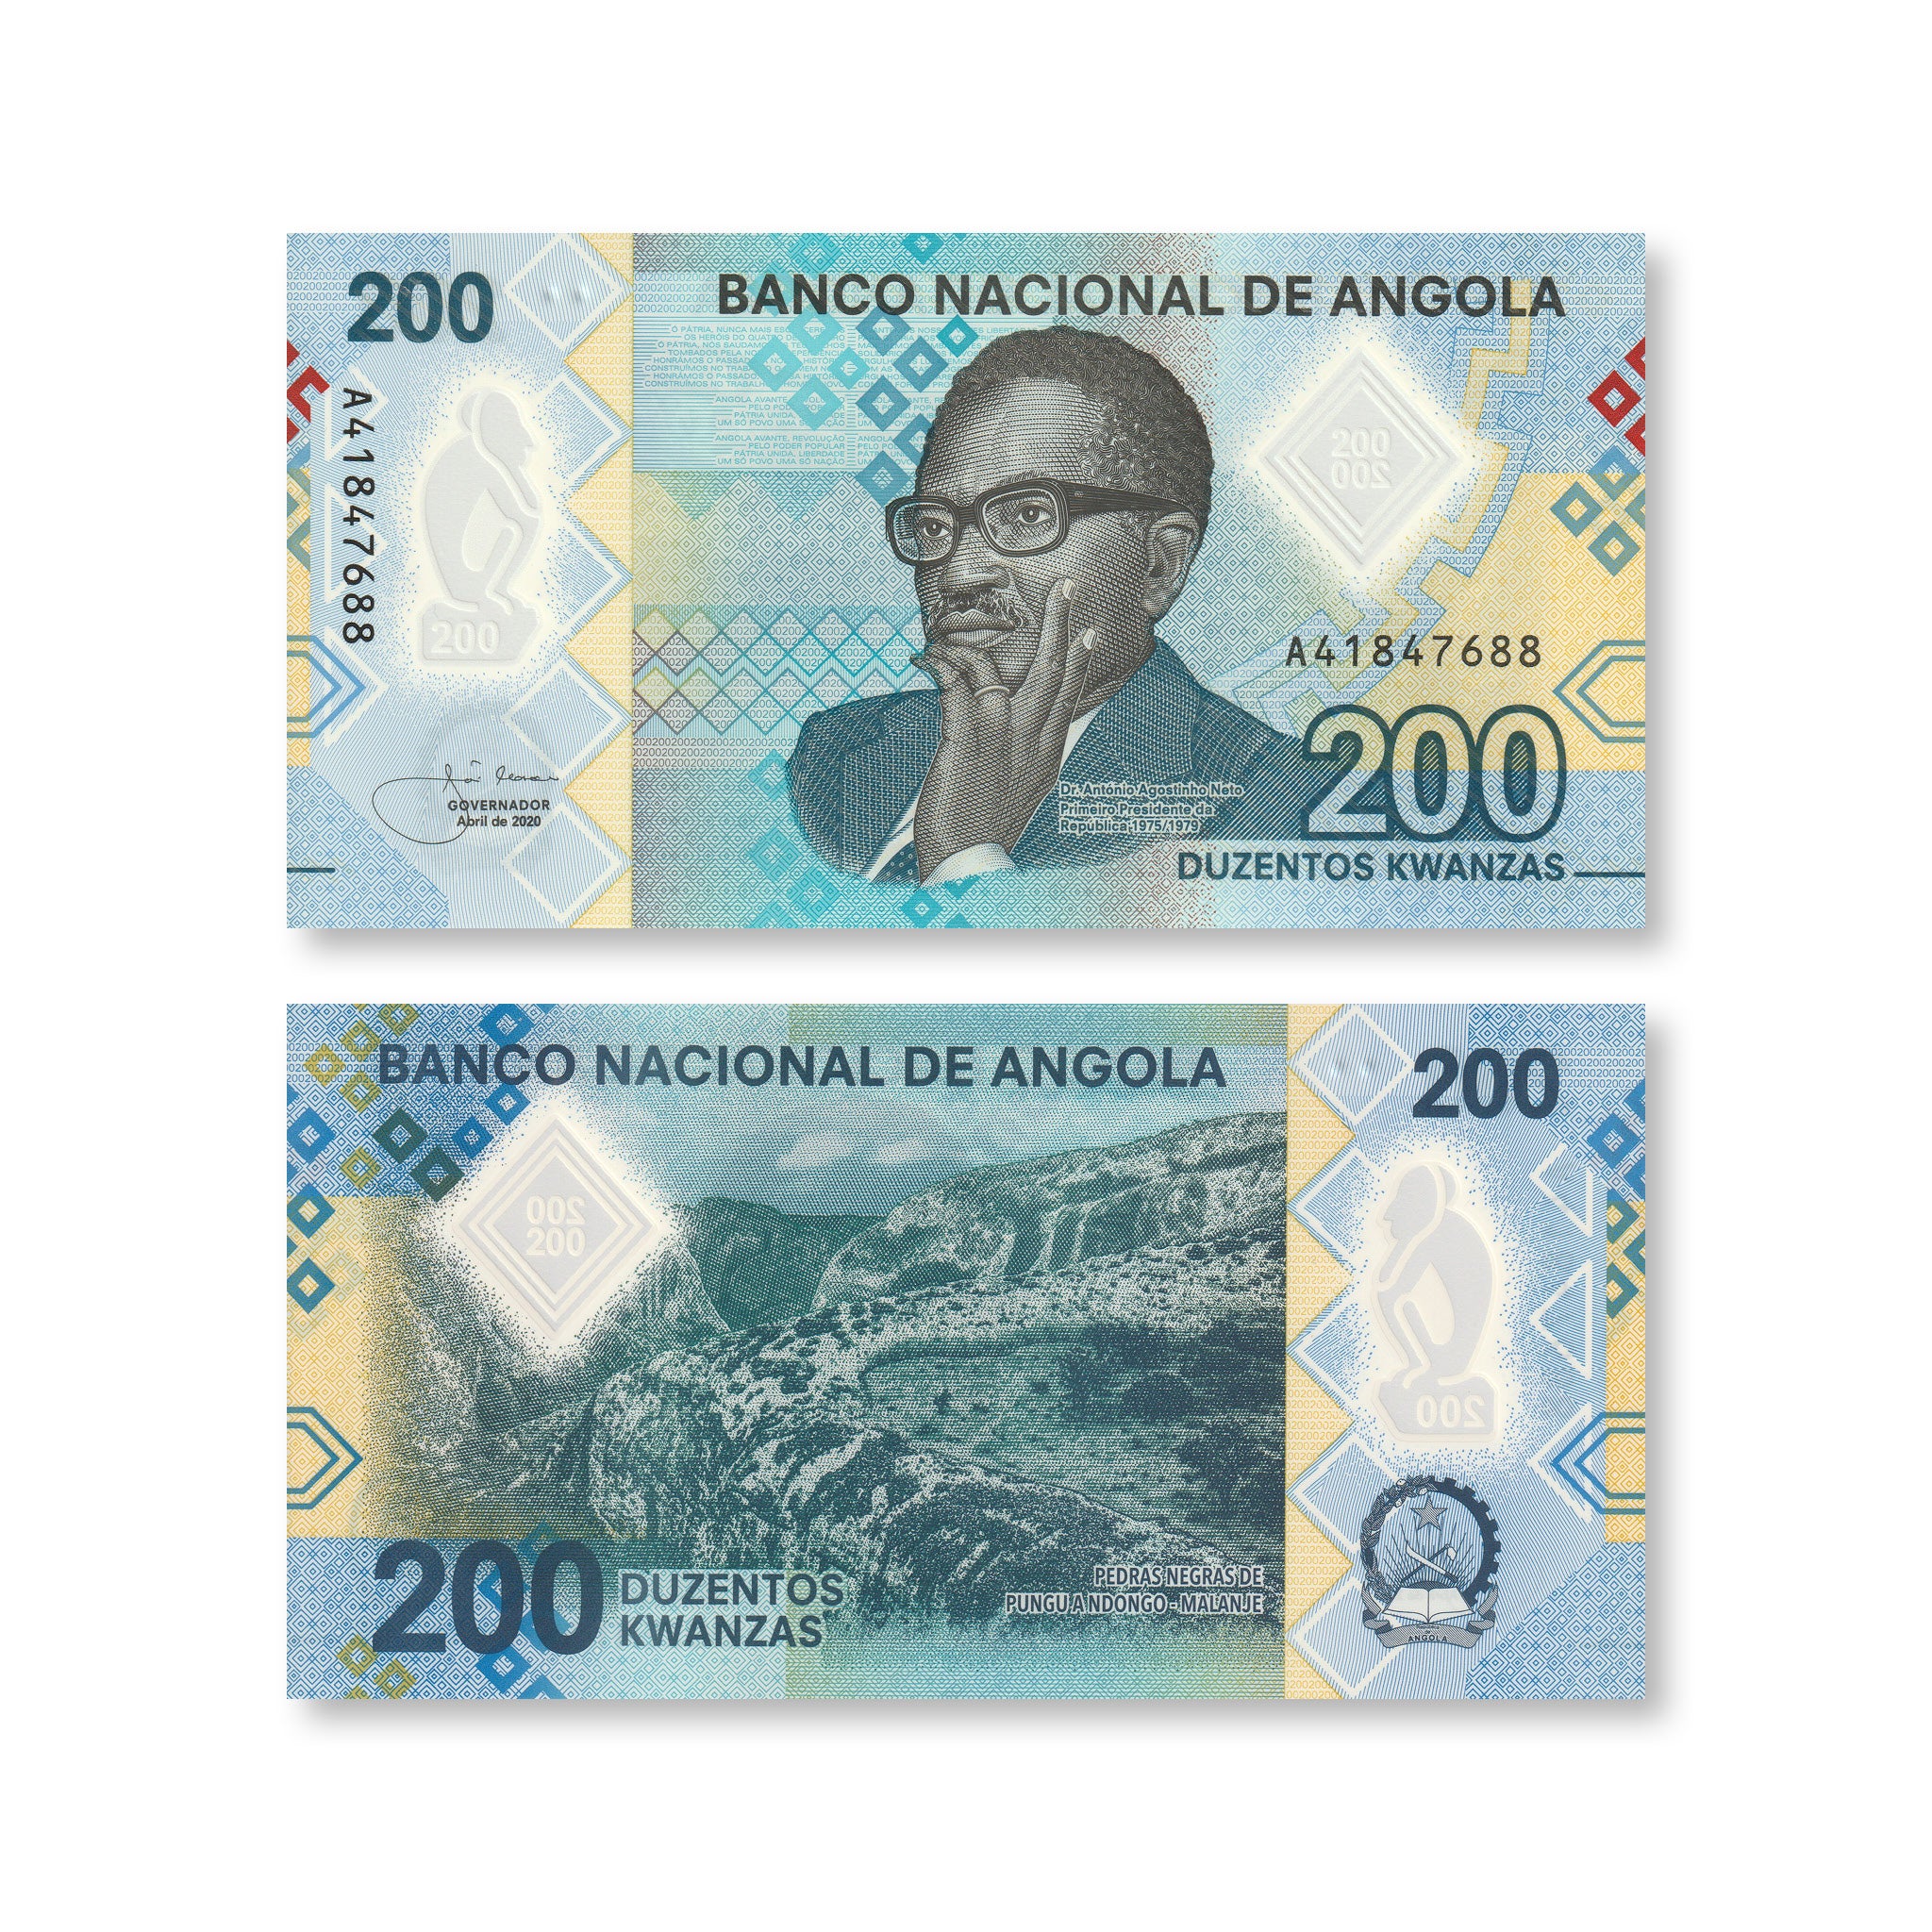 Angola 200 Kwanzas, 2020, B557a, UNC - Robert's World Money - World Banknotes